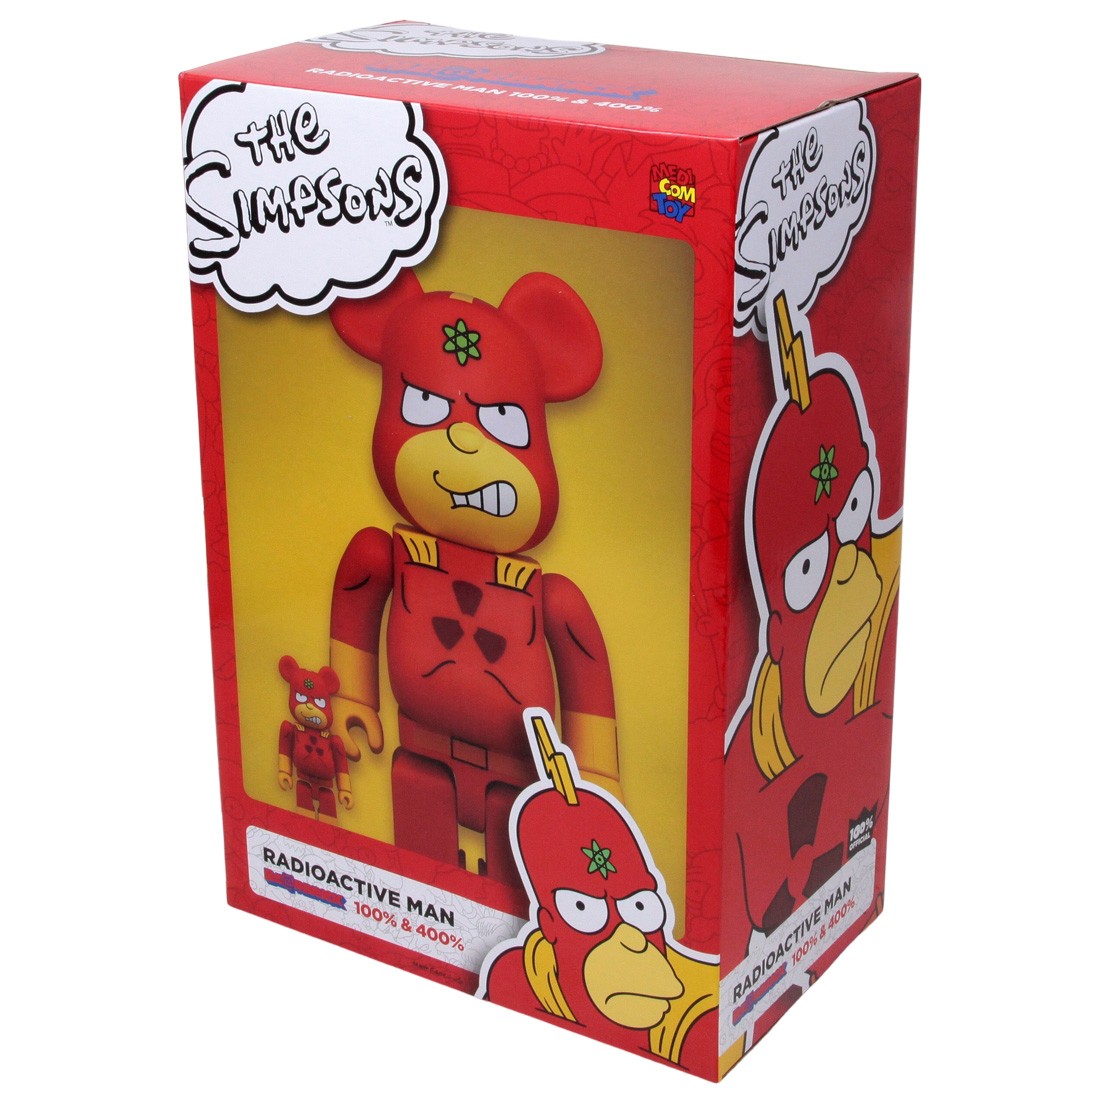 Medicom The Simpsons Radioactive Man 100% 400% Bearbrick Figure Set (red)